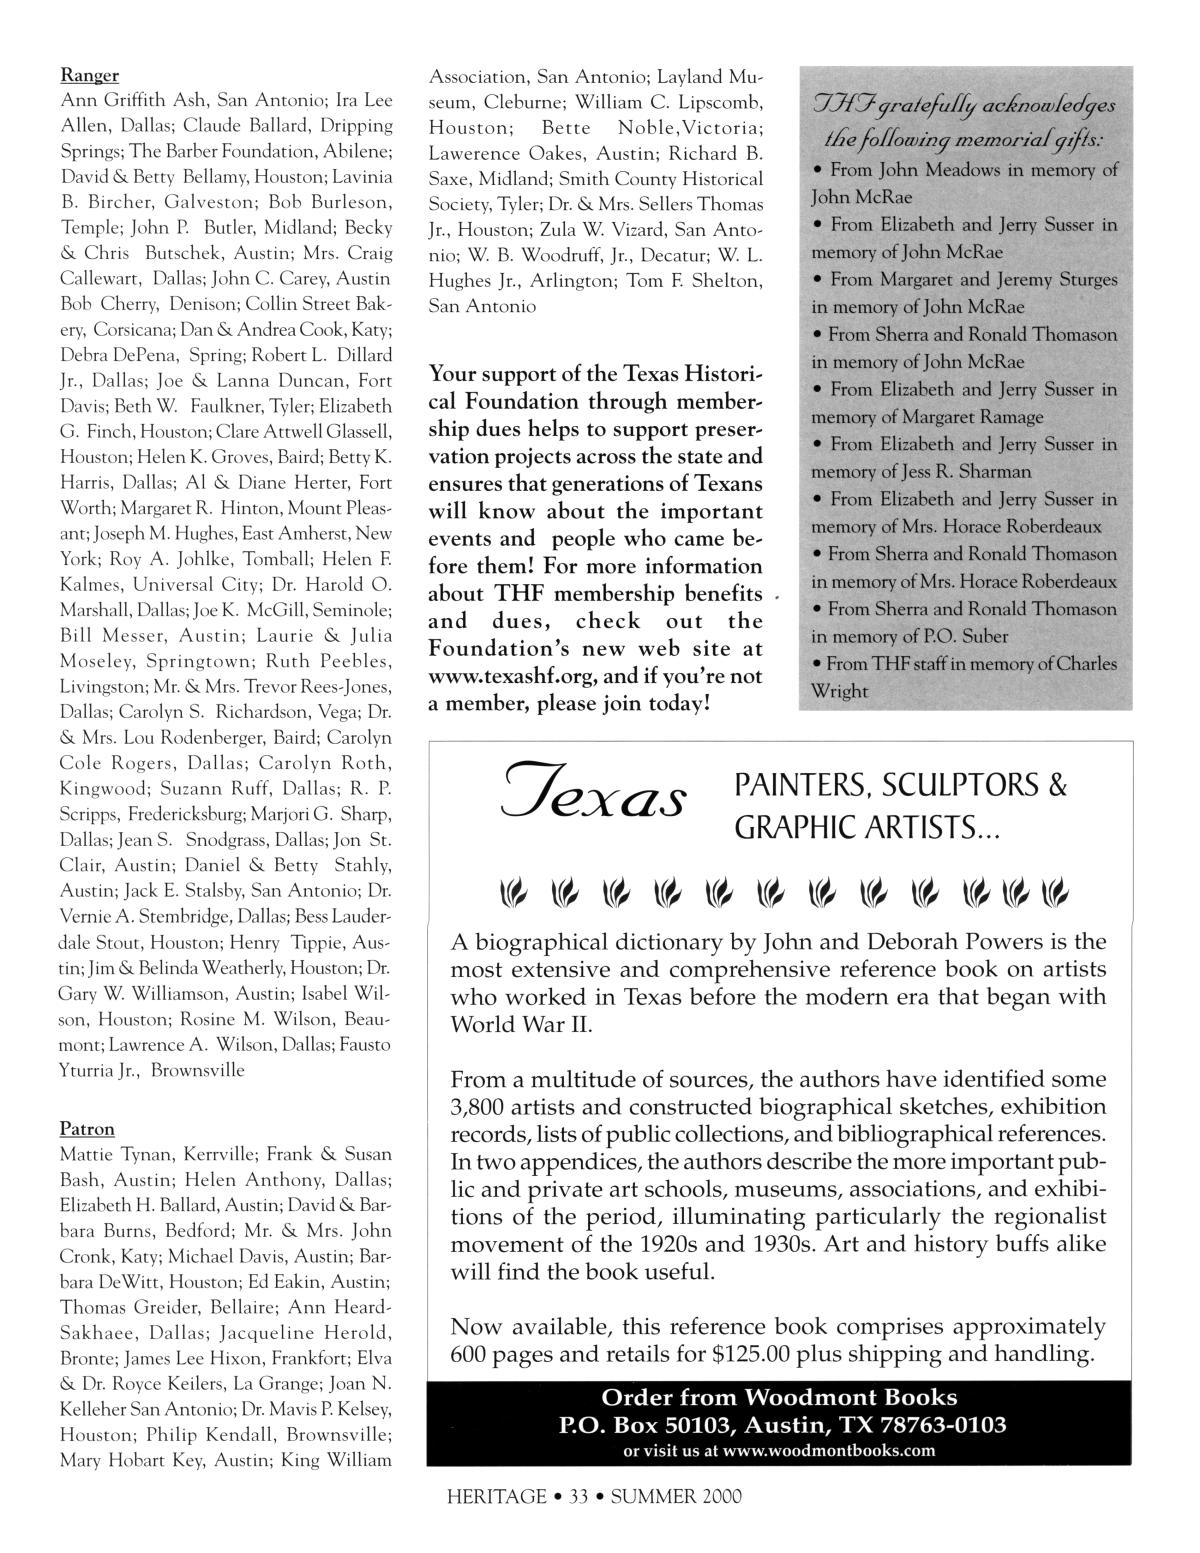 Texas Heritage, Volume 18, Number 3, Summer 2000
                                                
                                                    33
                                                